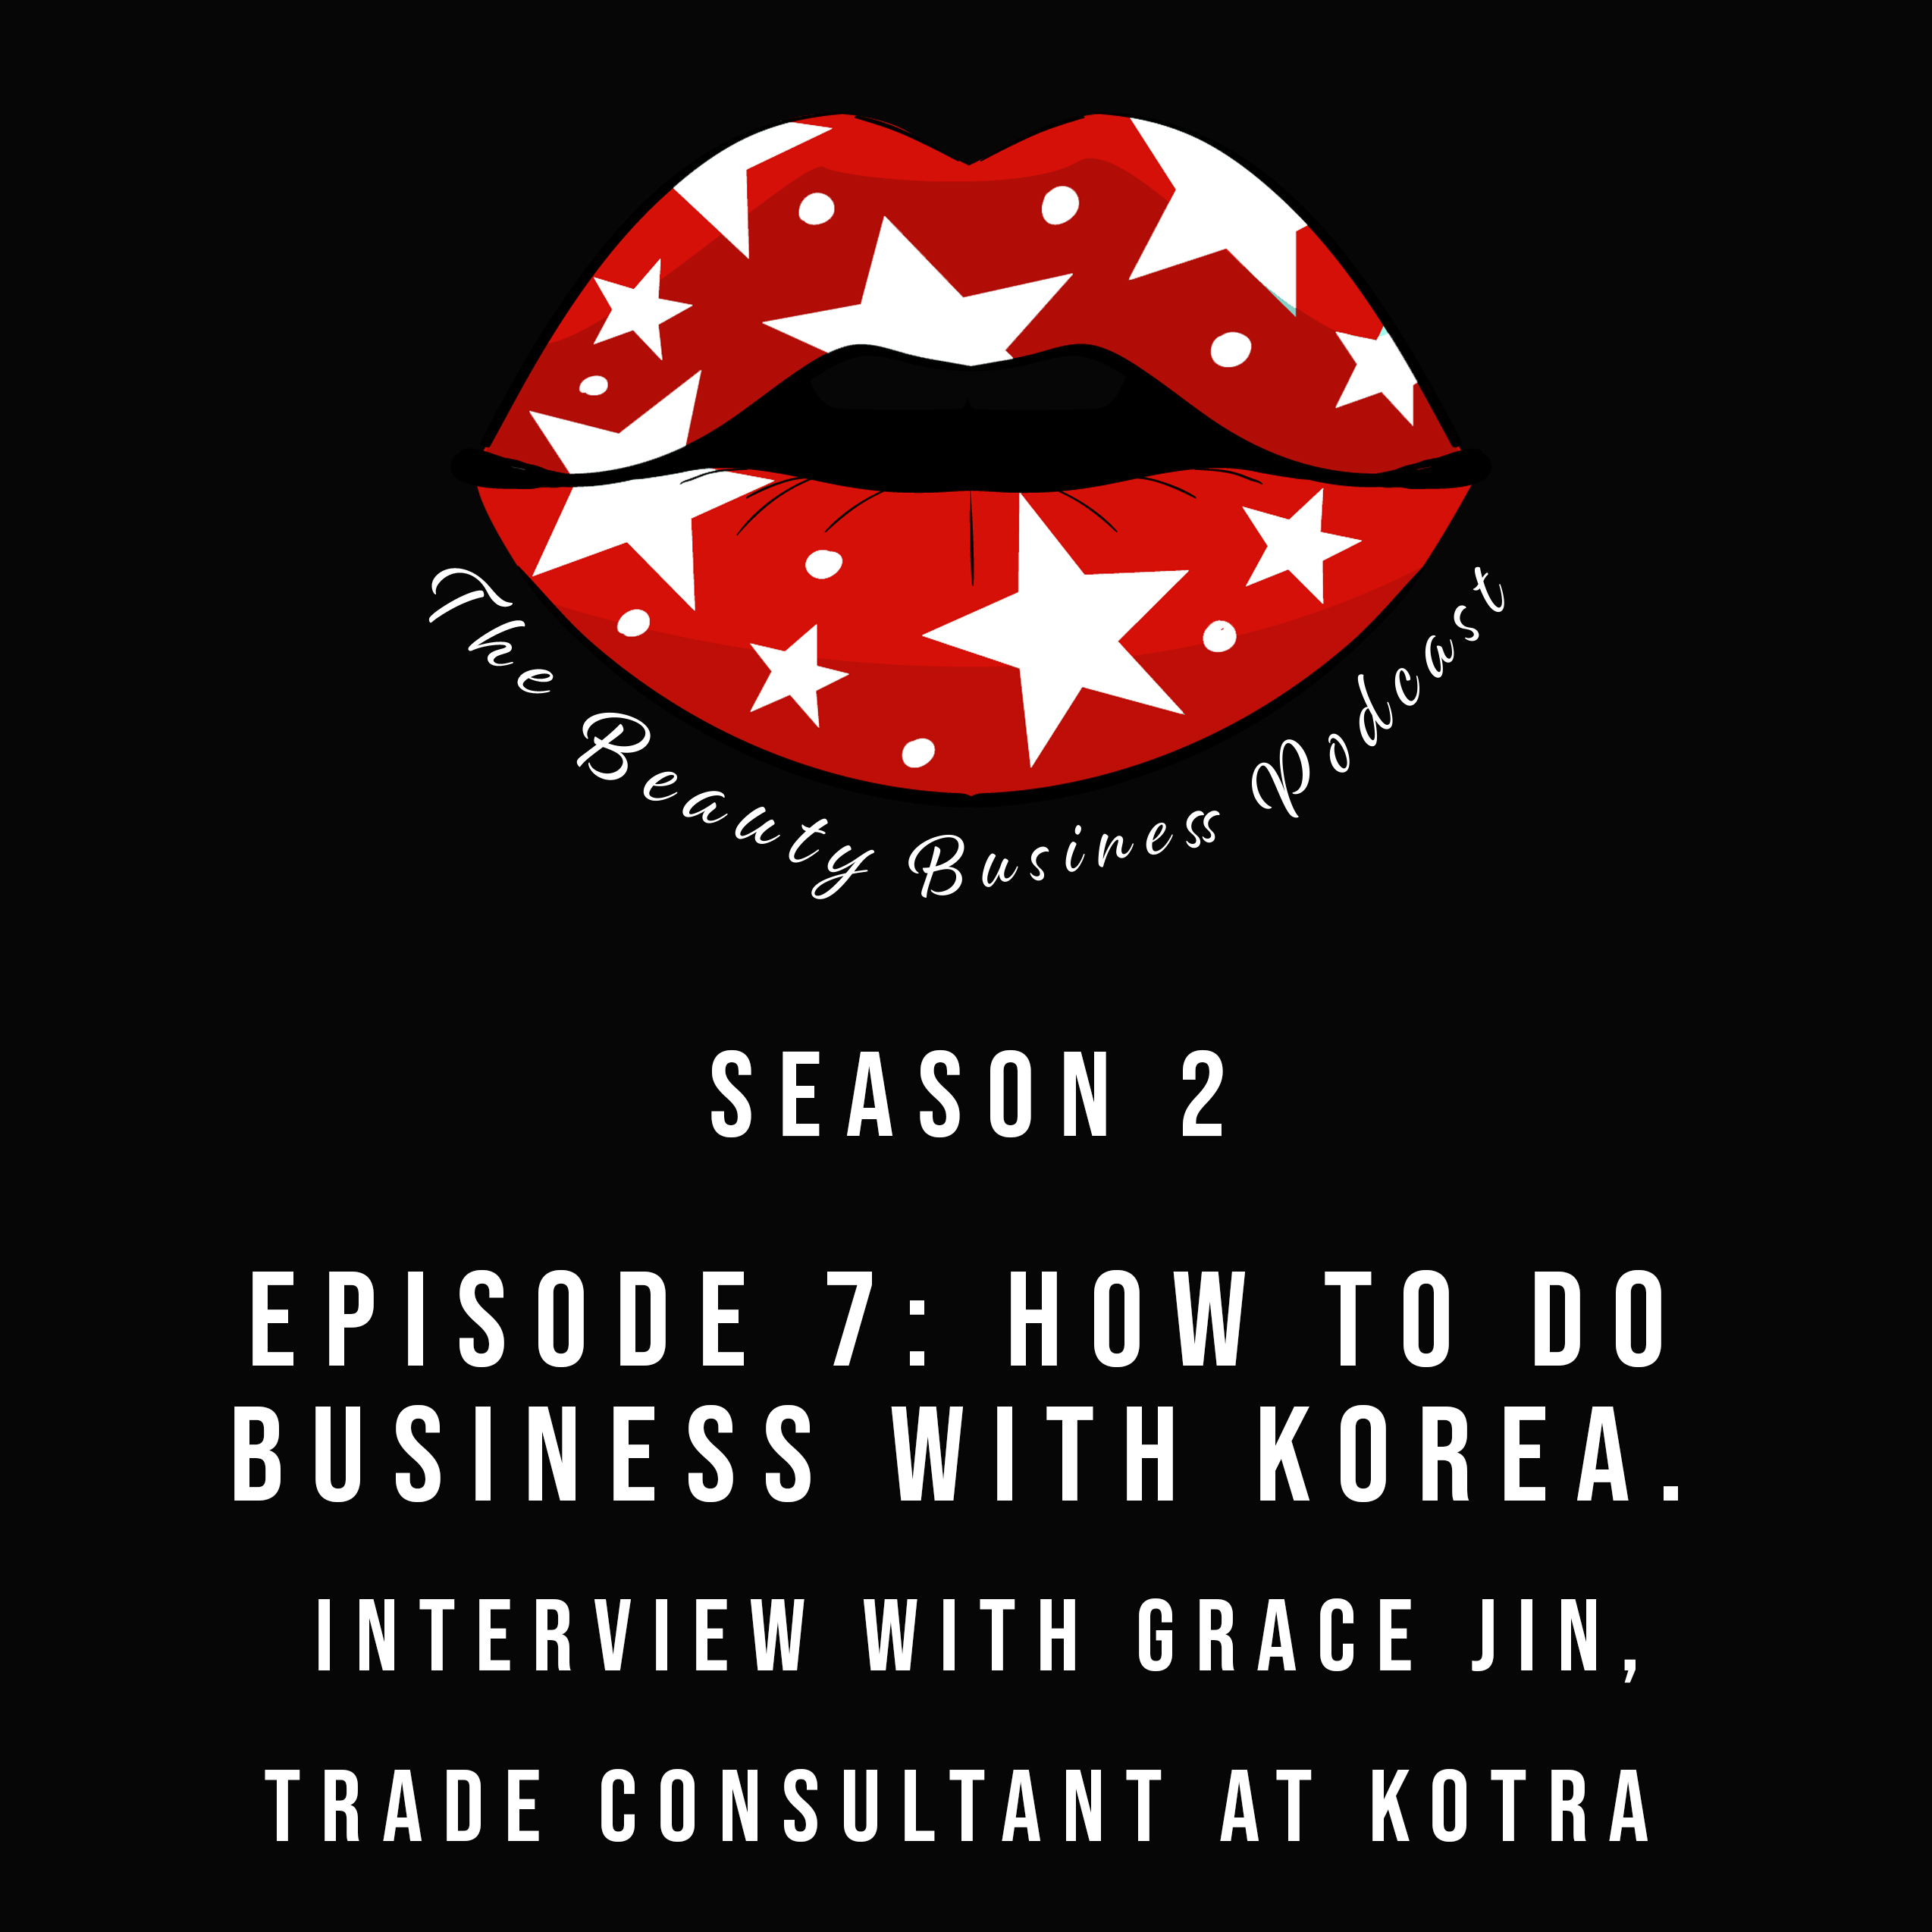 Season 2: Episode 7 - How to do business with Korea